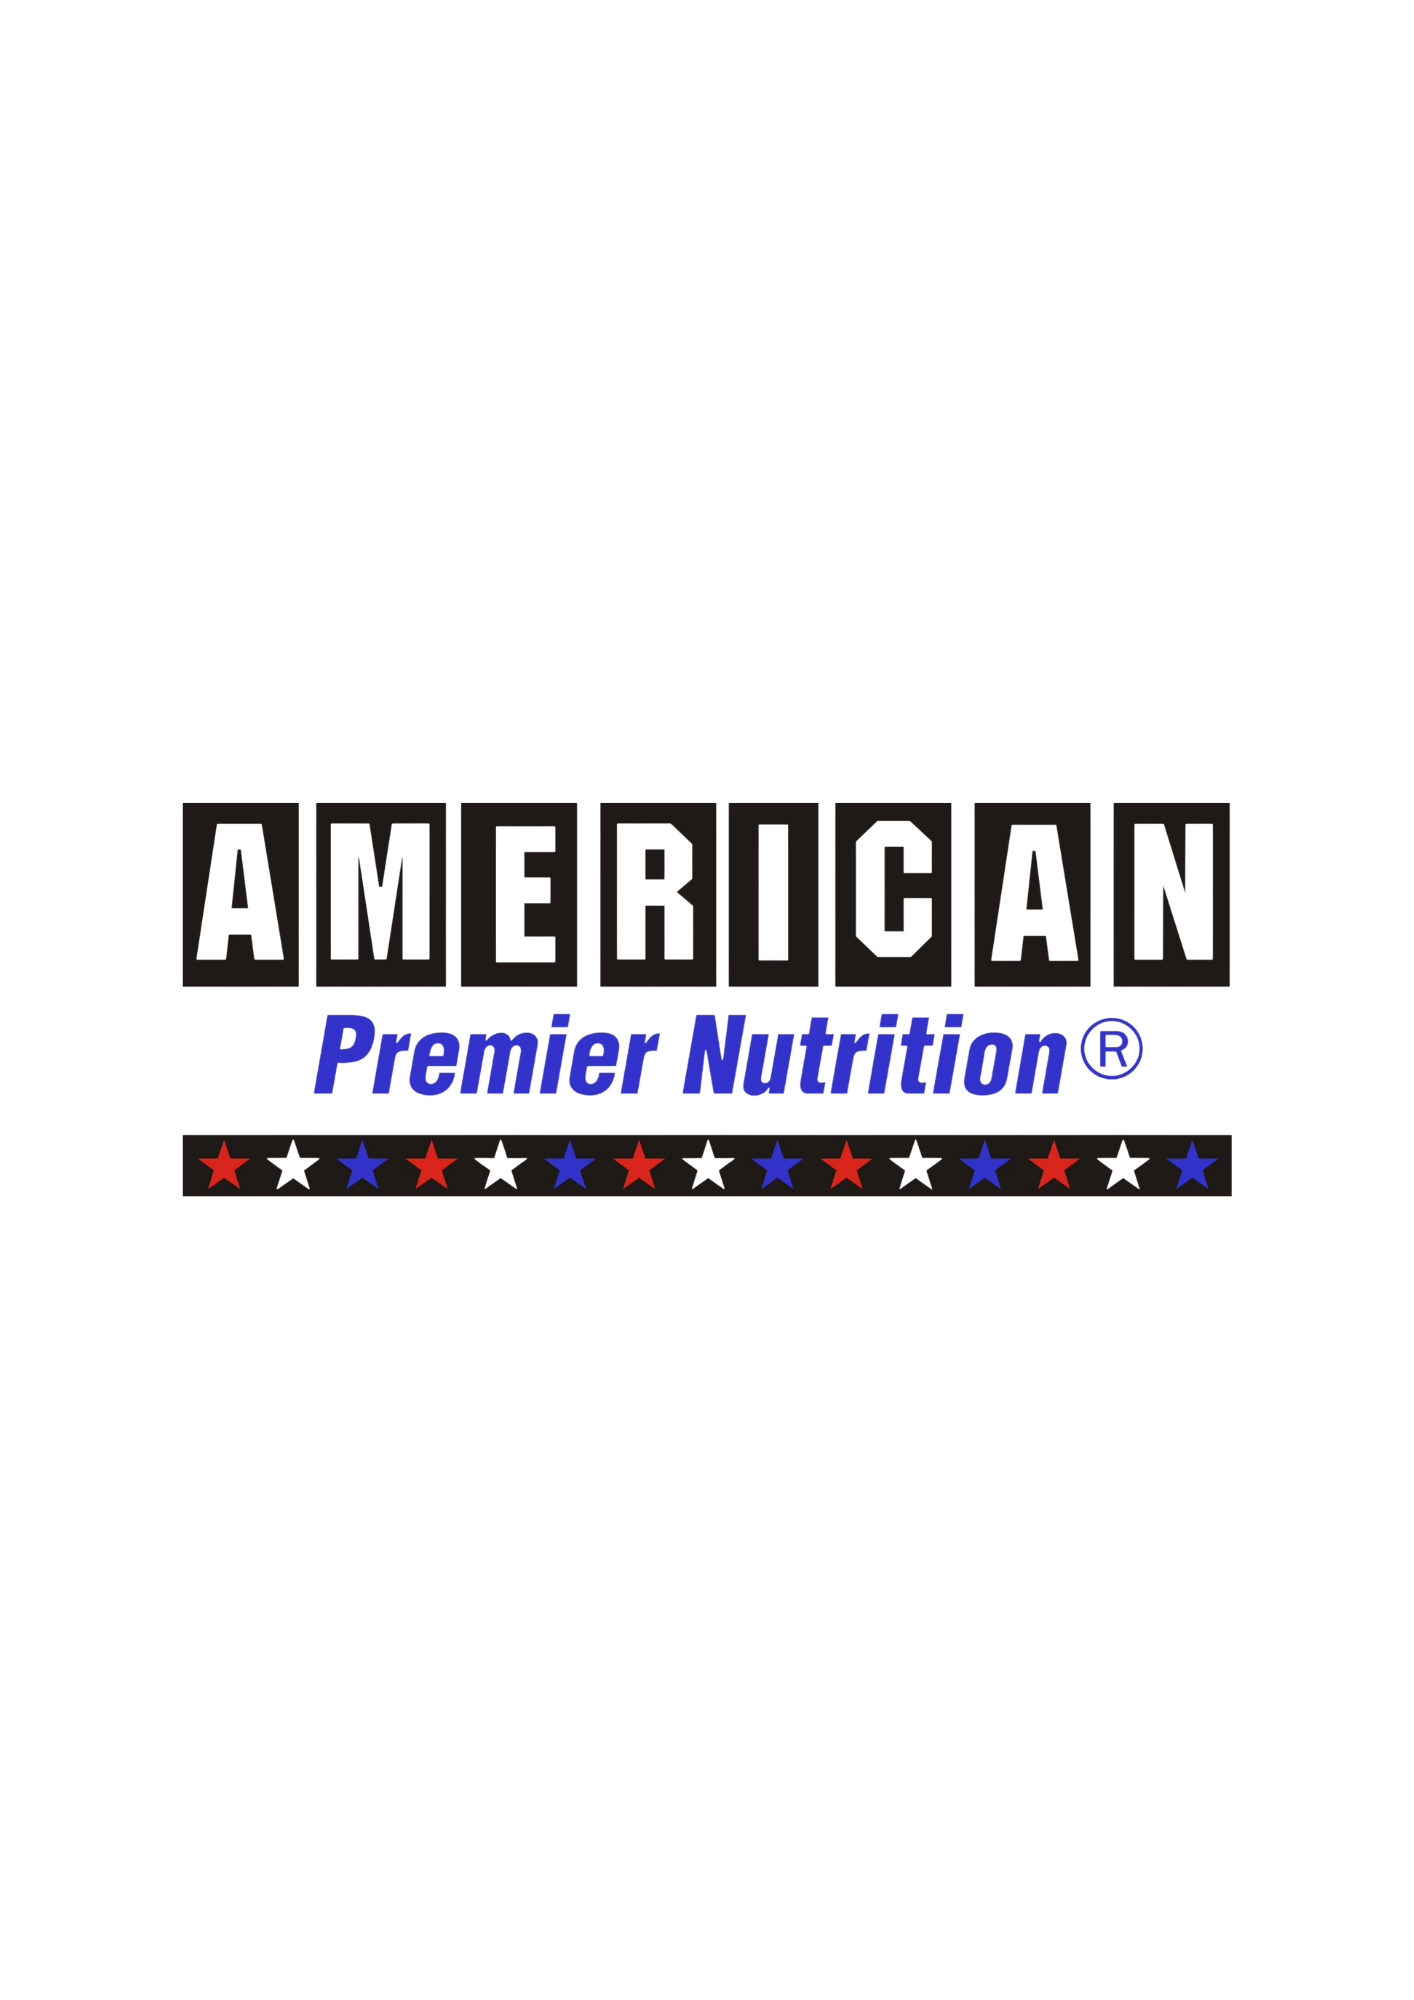 American Premier Nutrition Logo